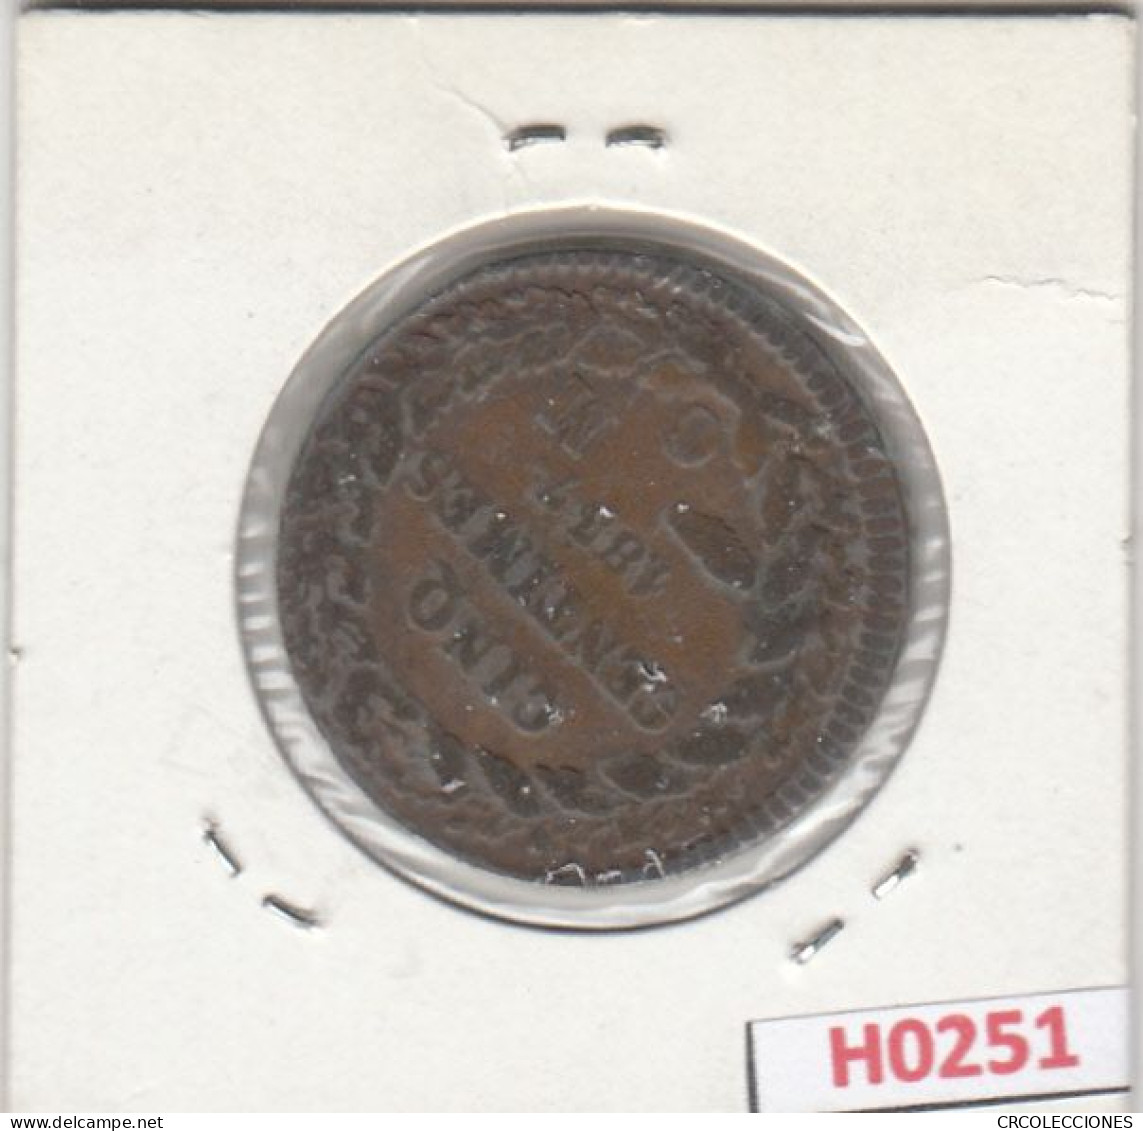 H0251 MONEDA MONACO 5 CENTIMOS 1837 BC - Charles III.